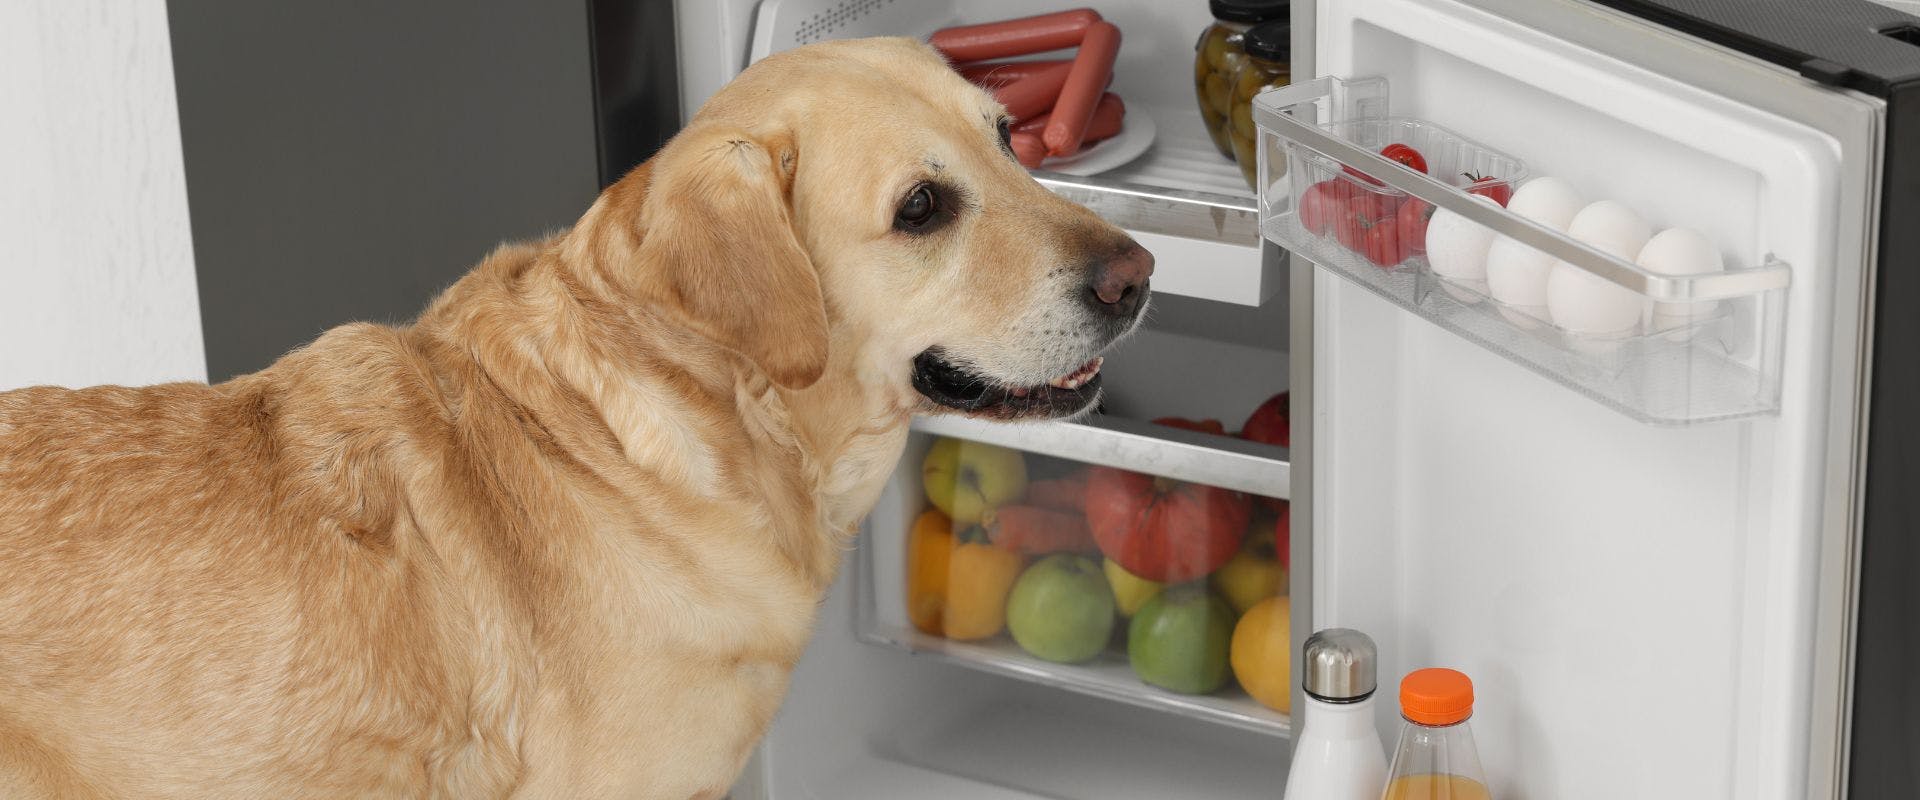 Labrador dog waiting at an open fridge